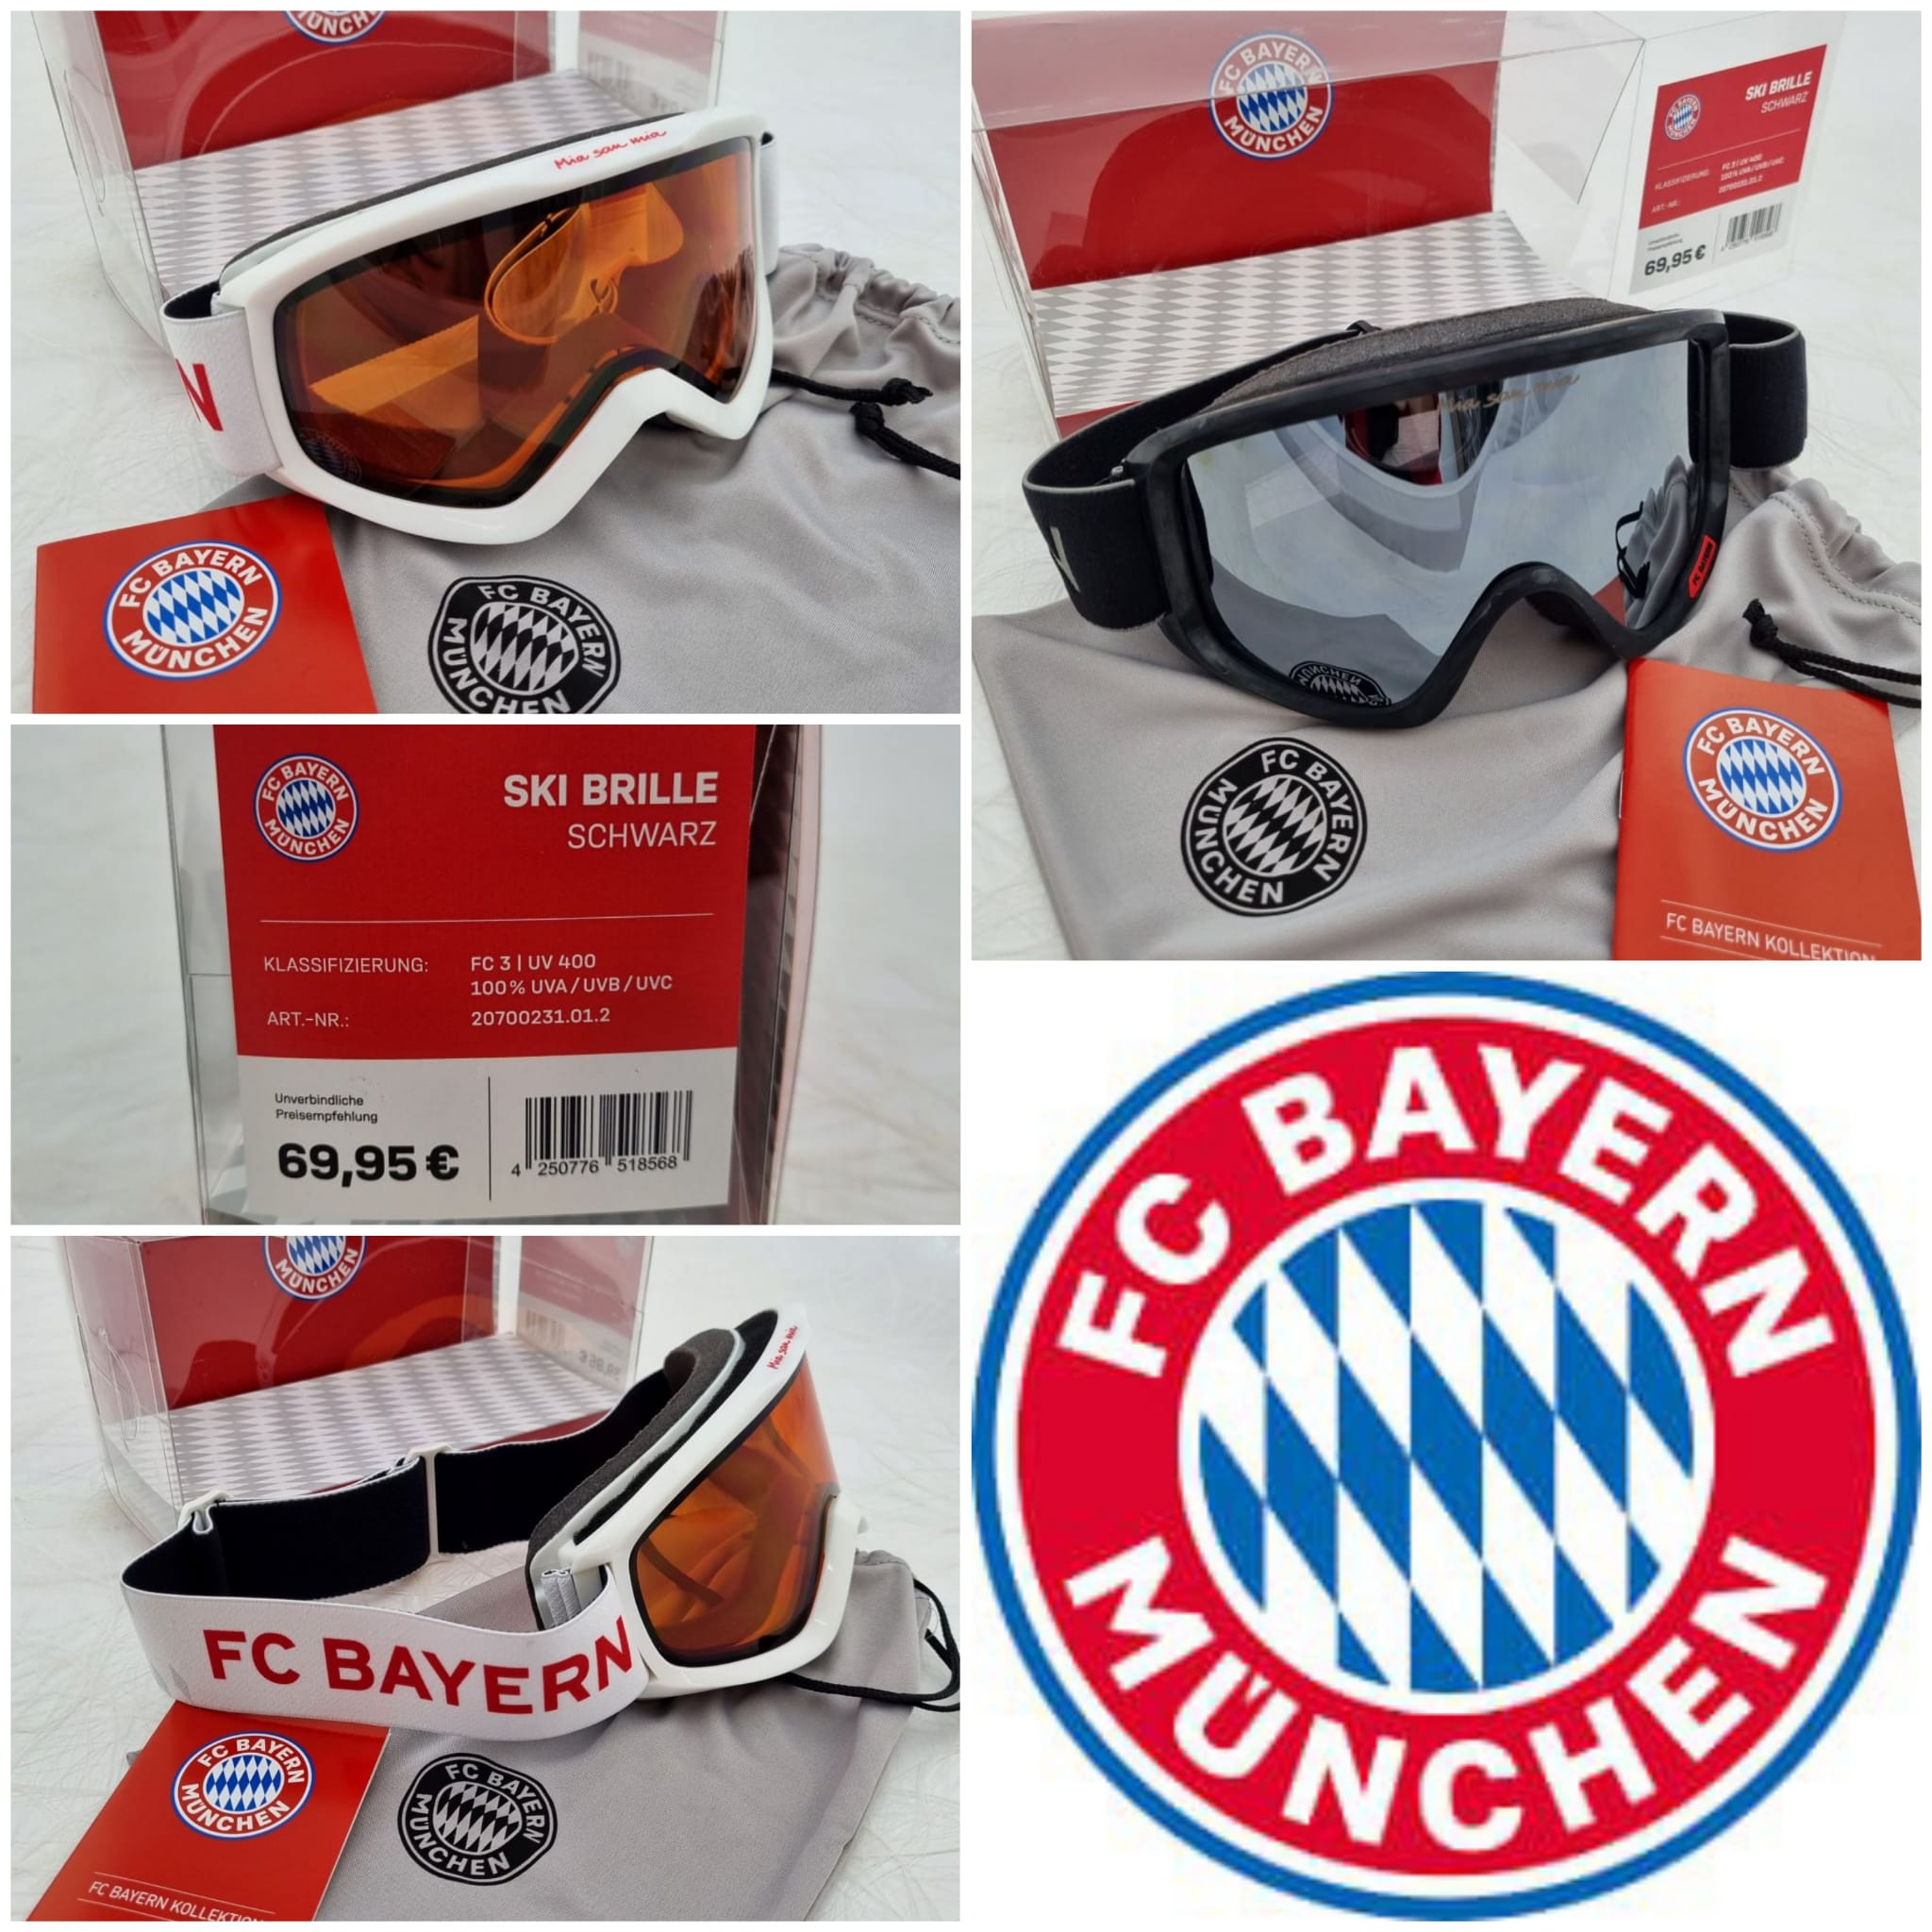 Ski goggles from FC Bayern München